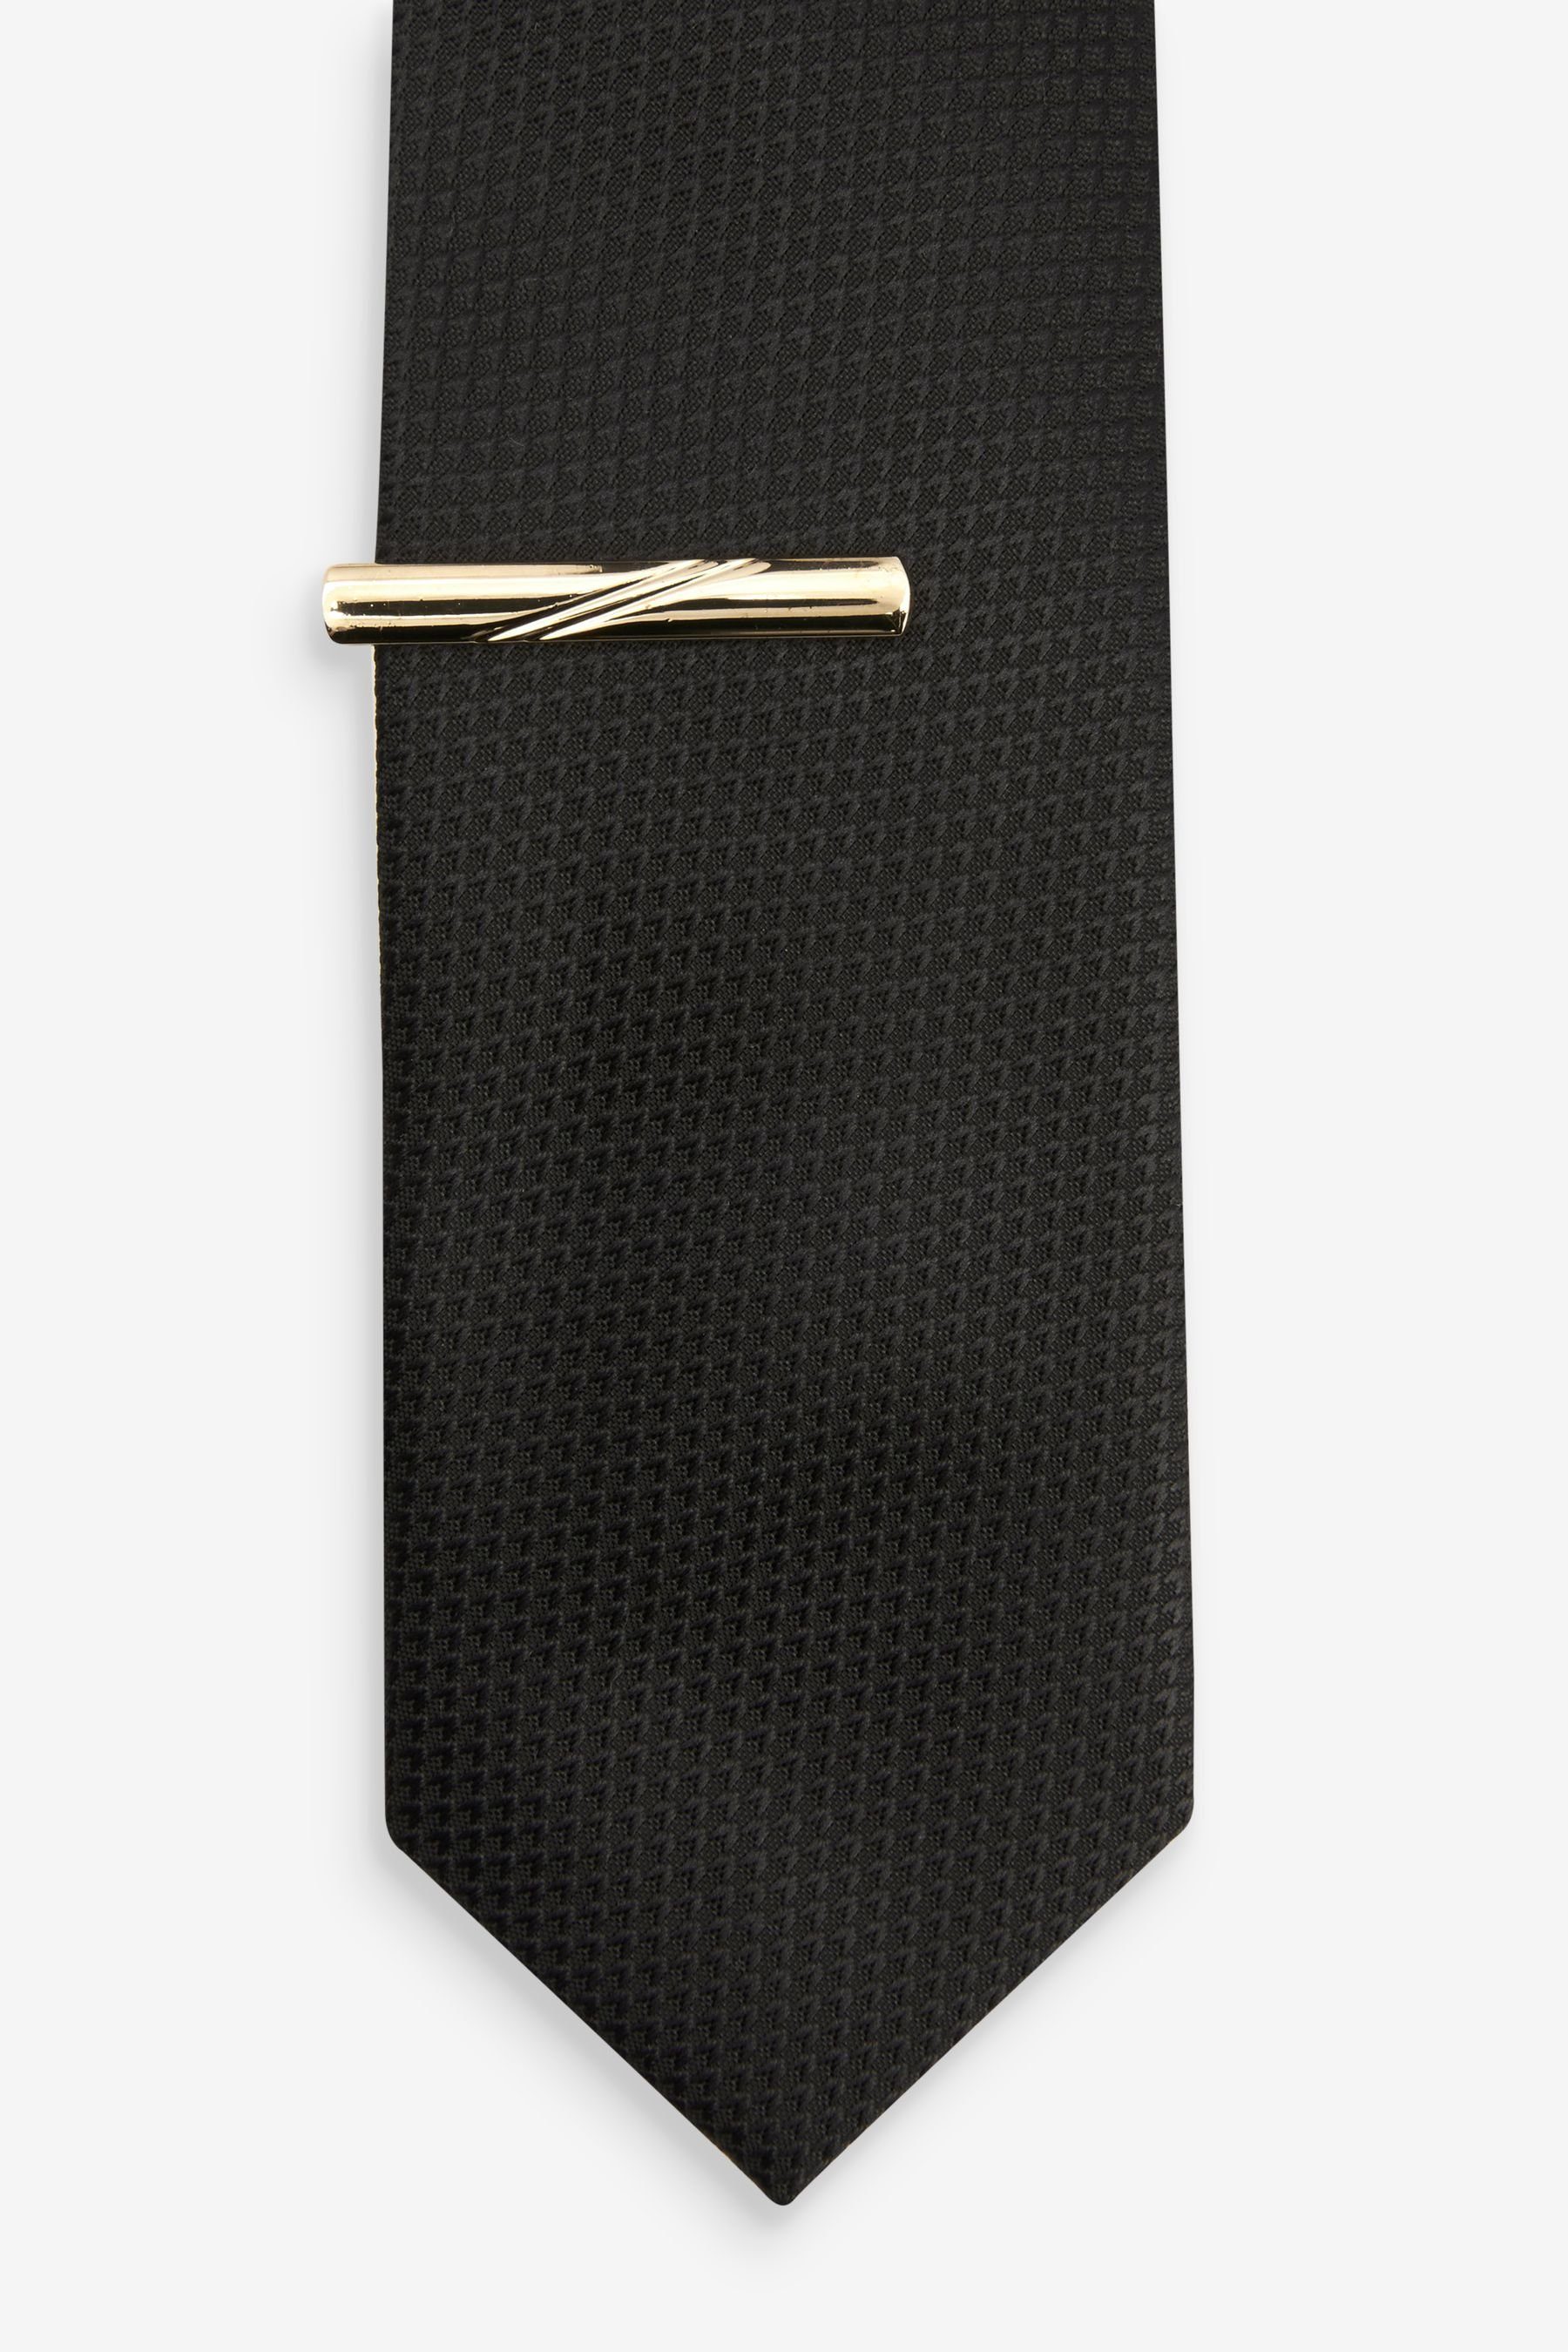 Next Krawatte Klammer aus + Recyclingpolyester Krawatte Schmale Black/Gold (2-St)